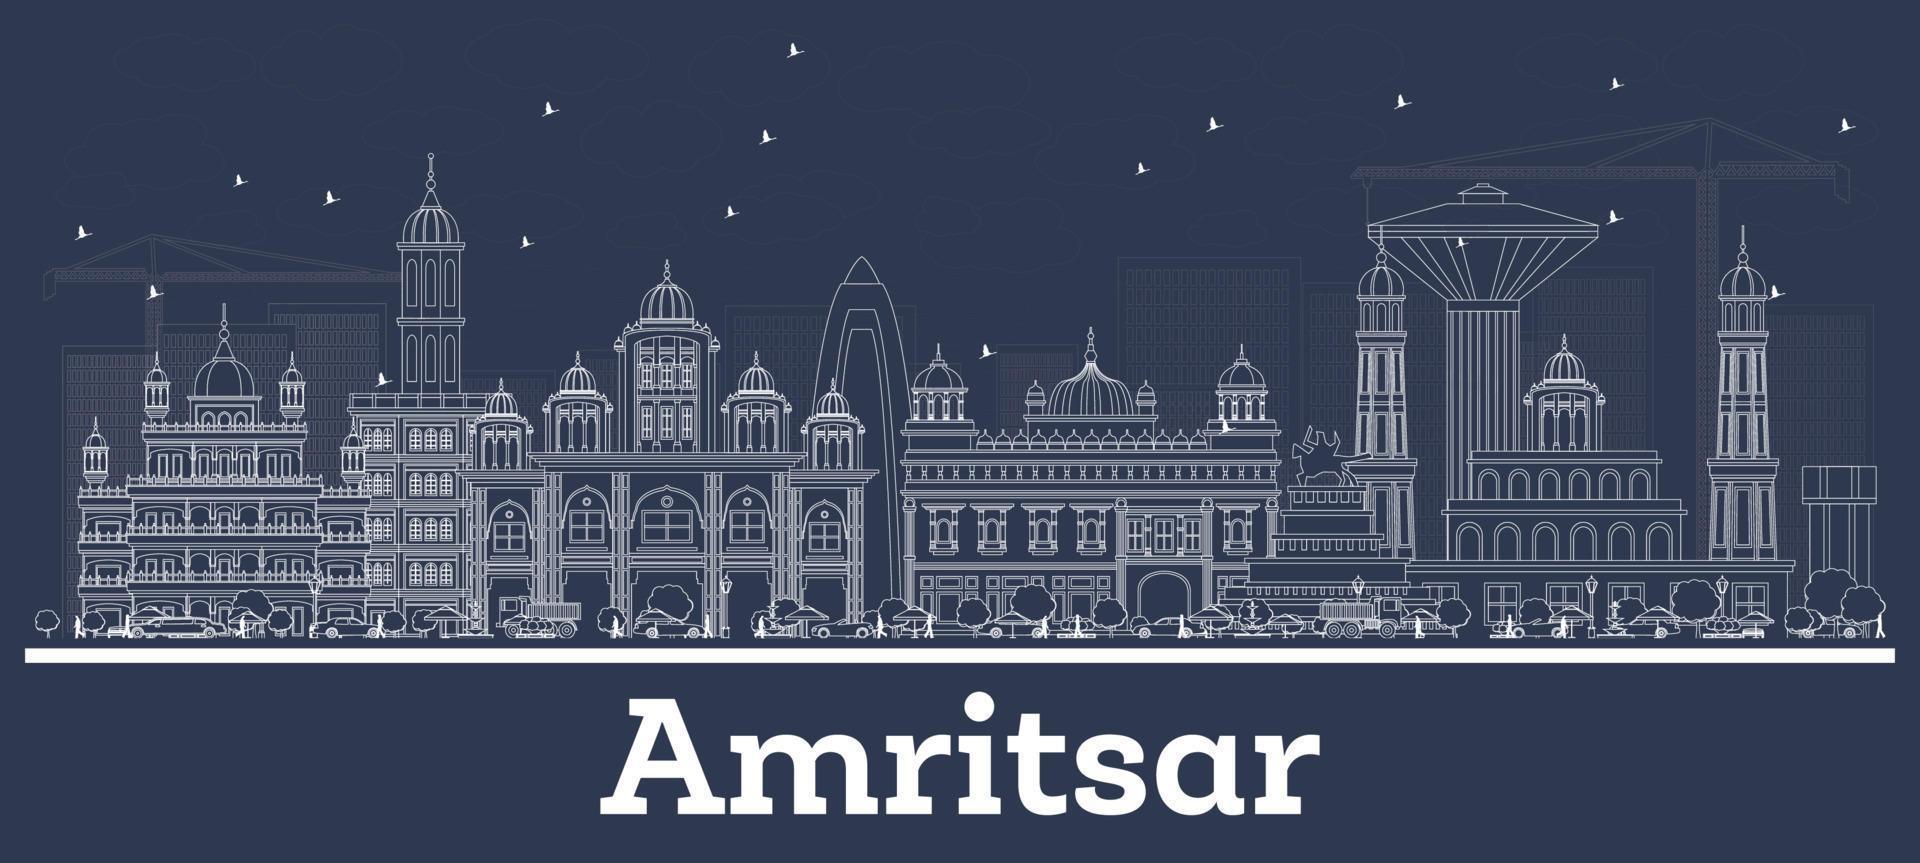 delinear o horizonte da cidade amritsar índia com edifícios brancos. vetor